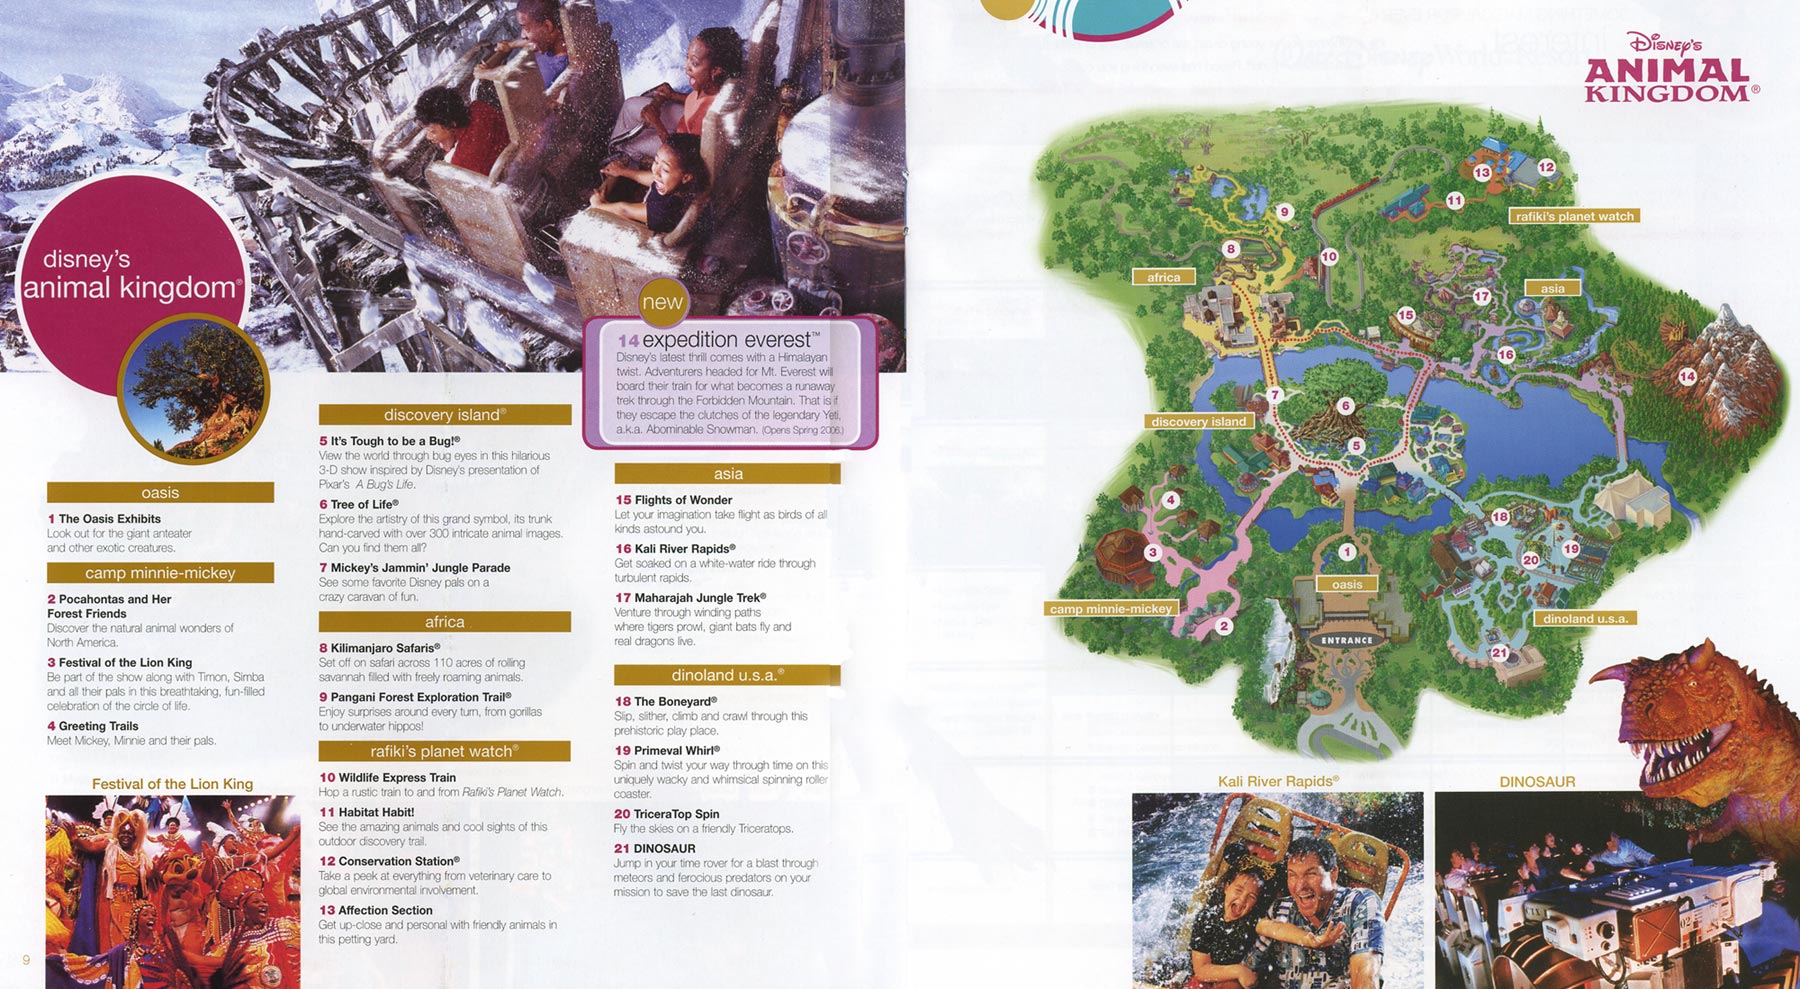 Disney's Animal Kingdom Map 2006